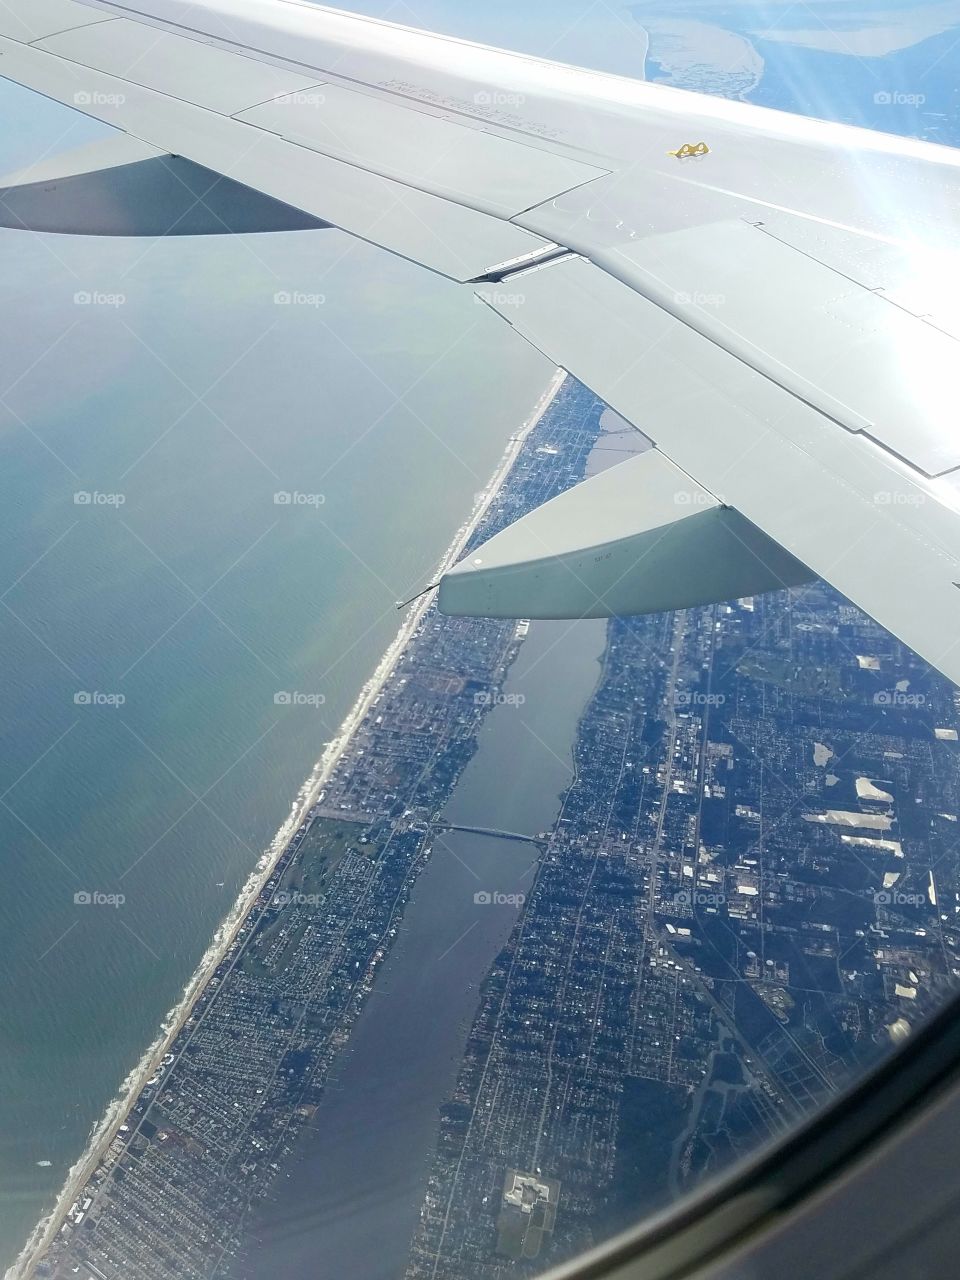 Florida coastline from 35,000 feet